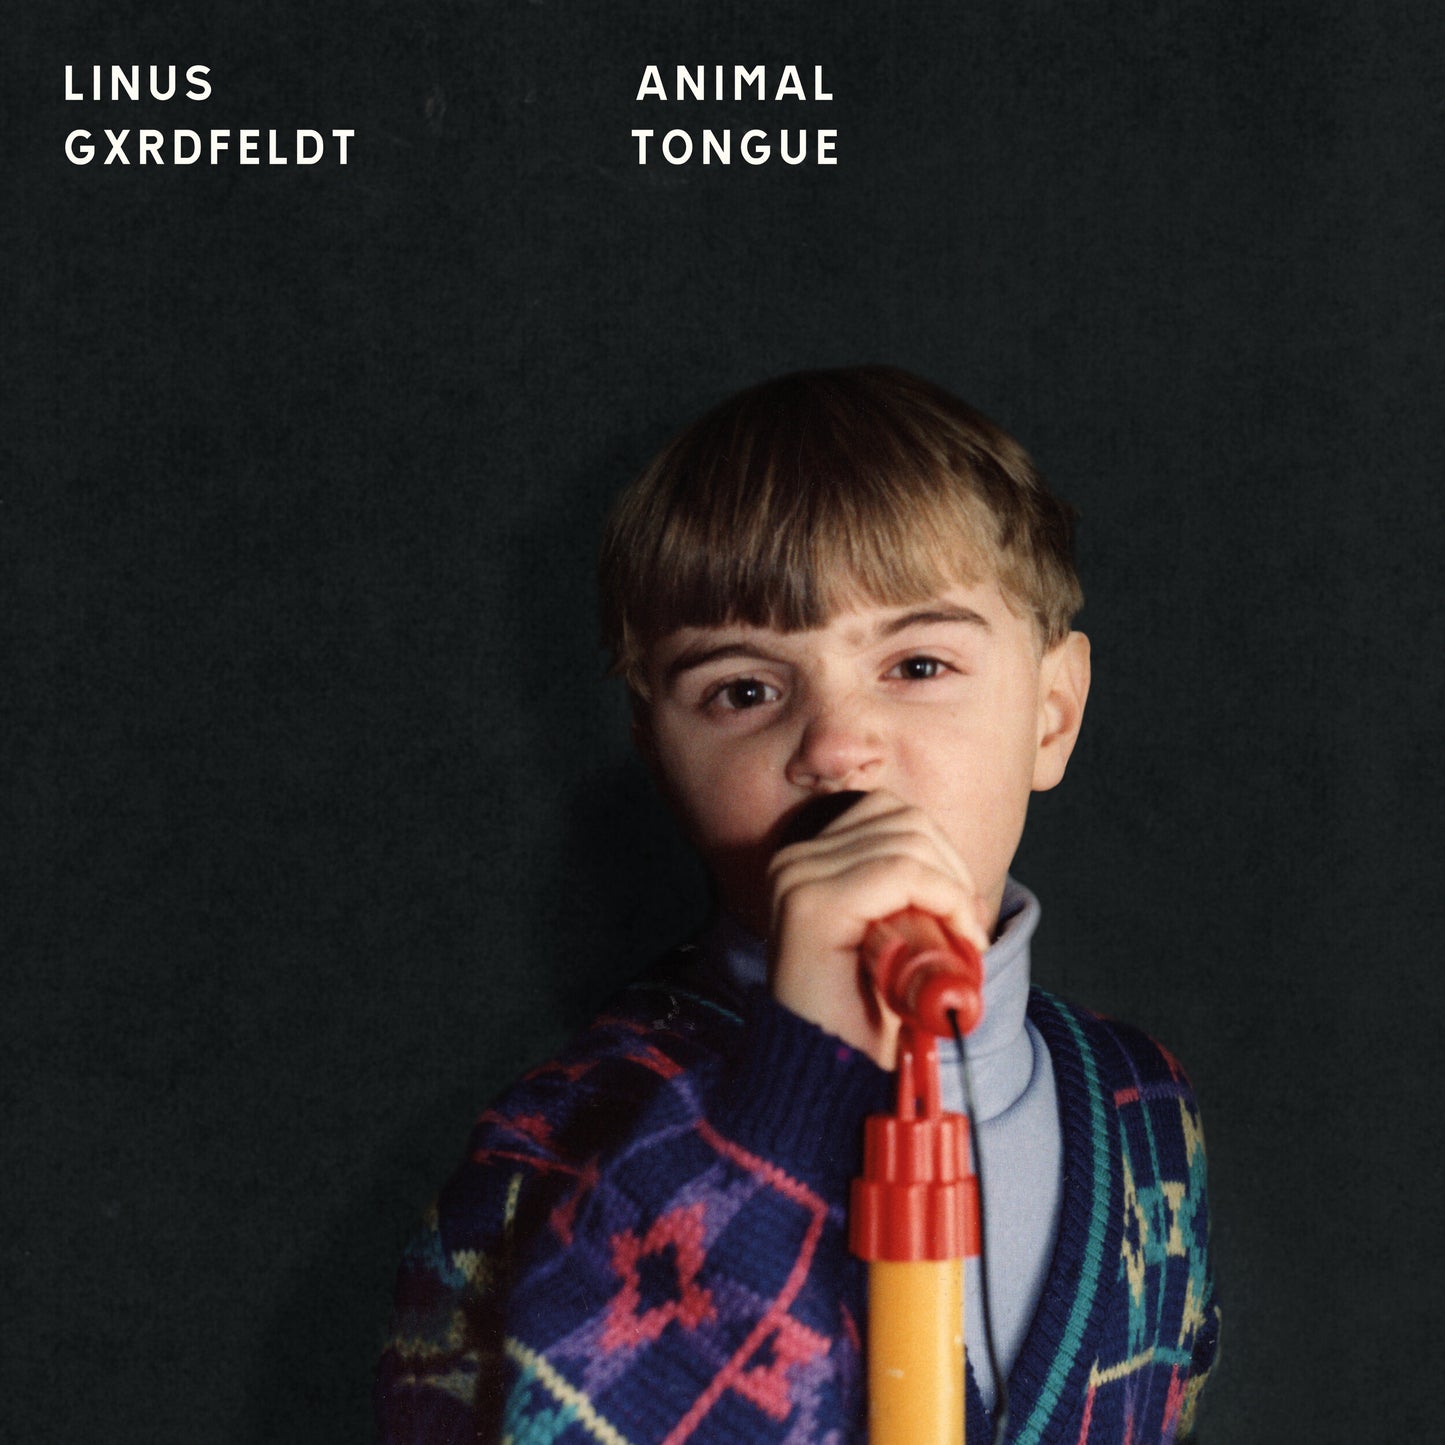 Linus Gxrdfeldt - Animal Tongue